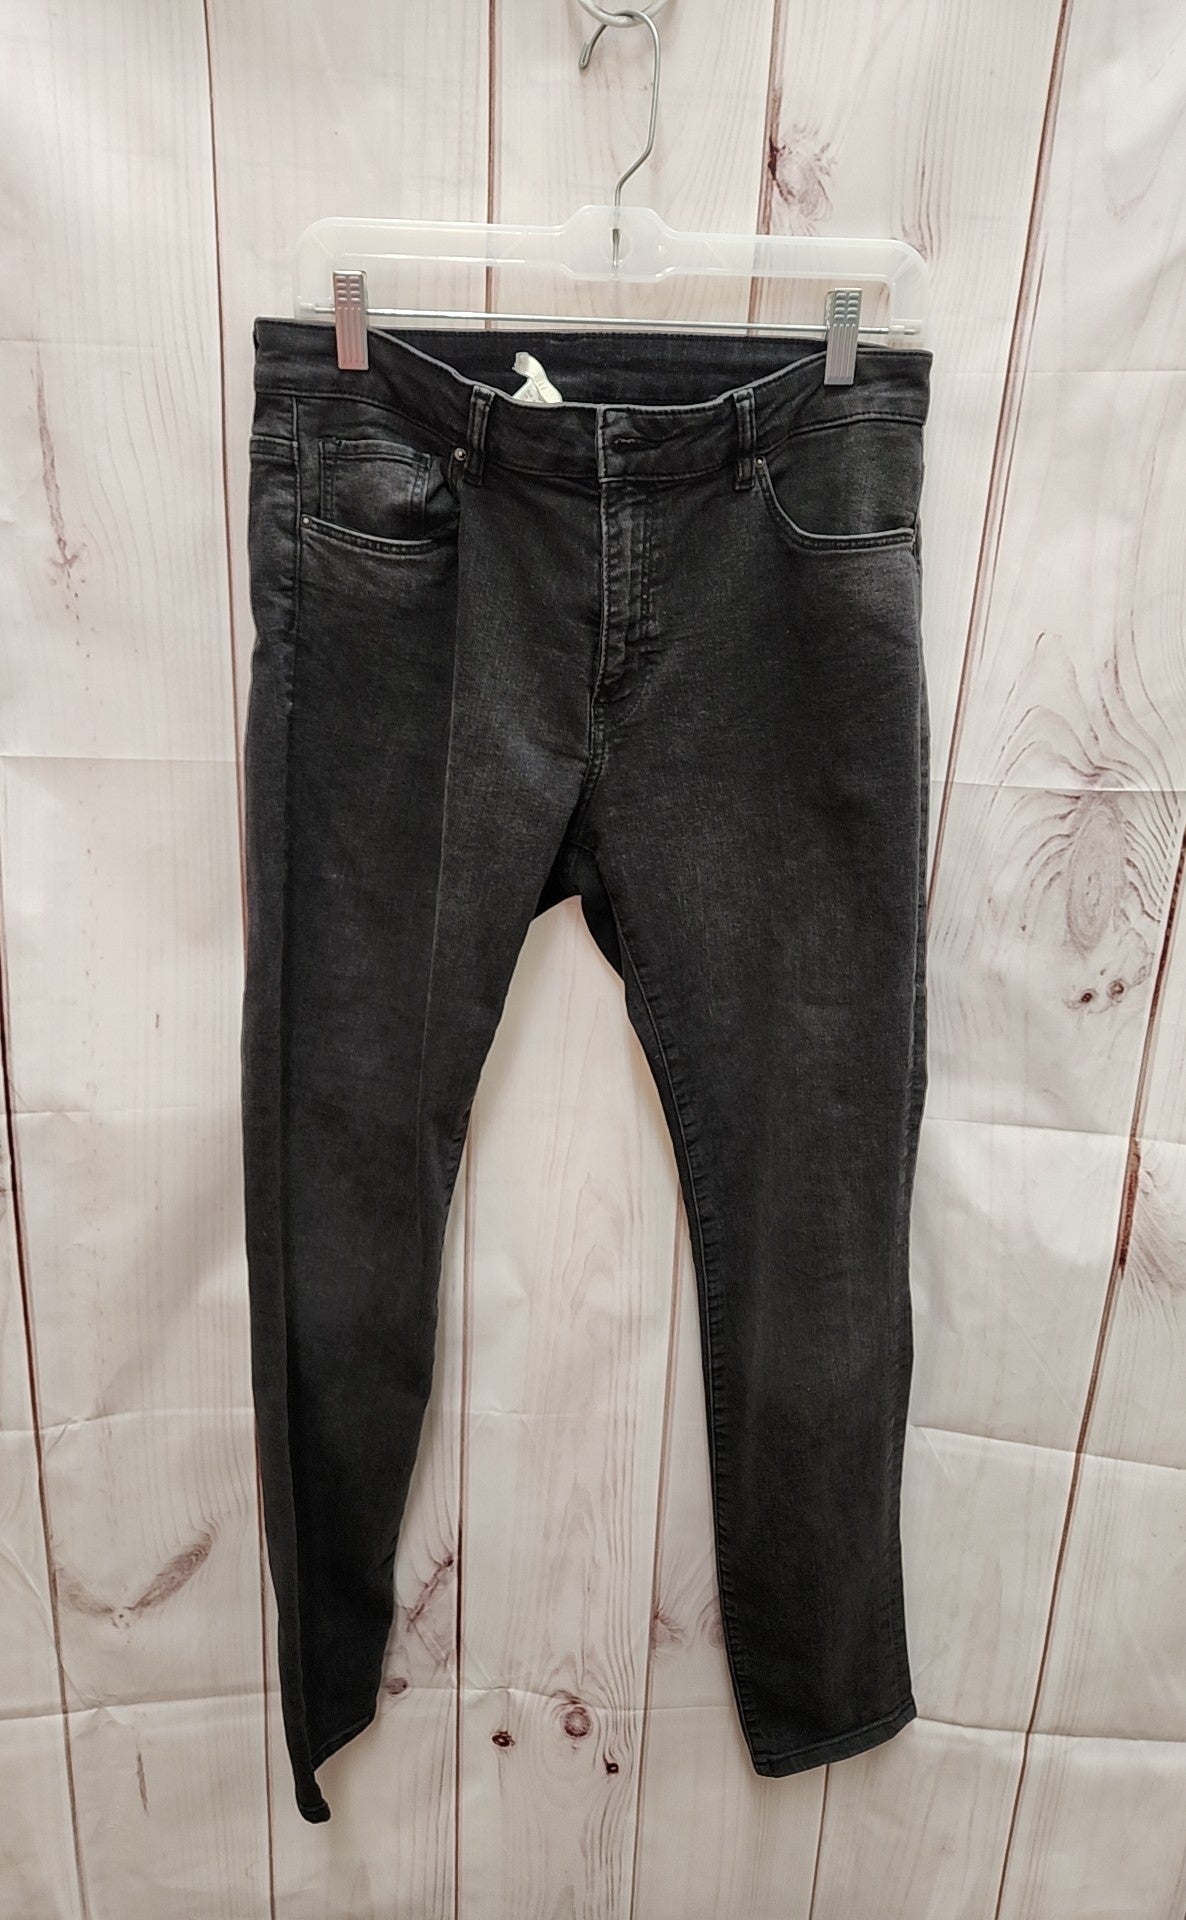 H&M Women's Size 31 (11-12) Black Jeans